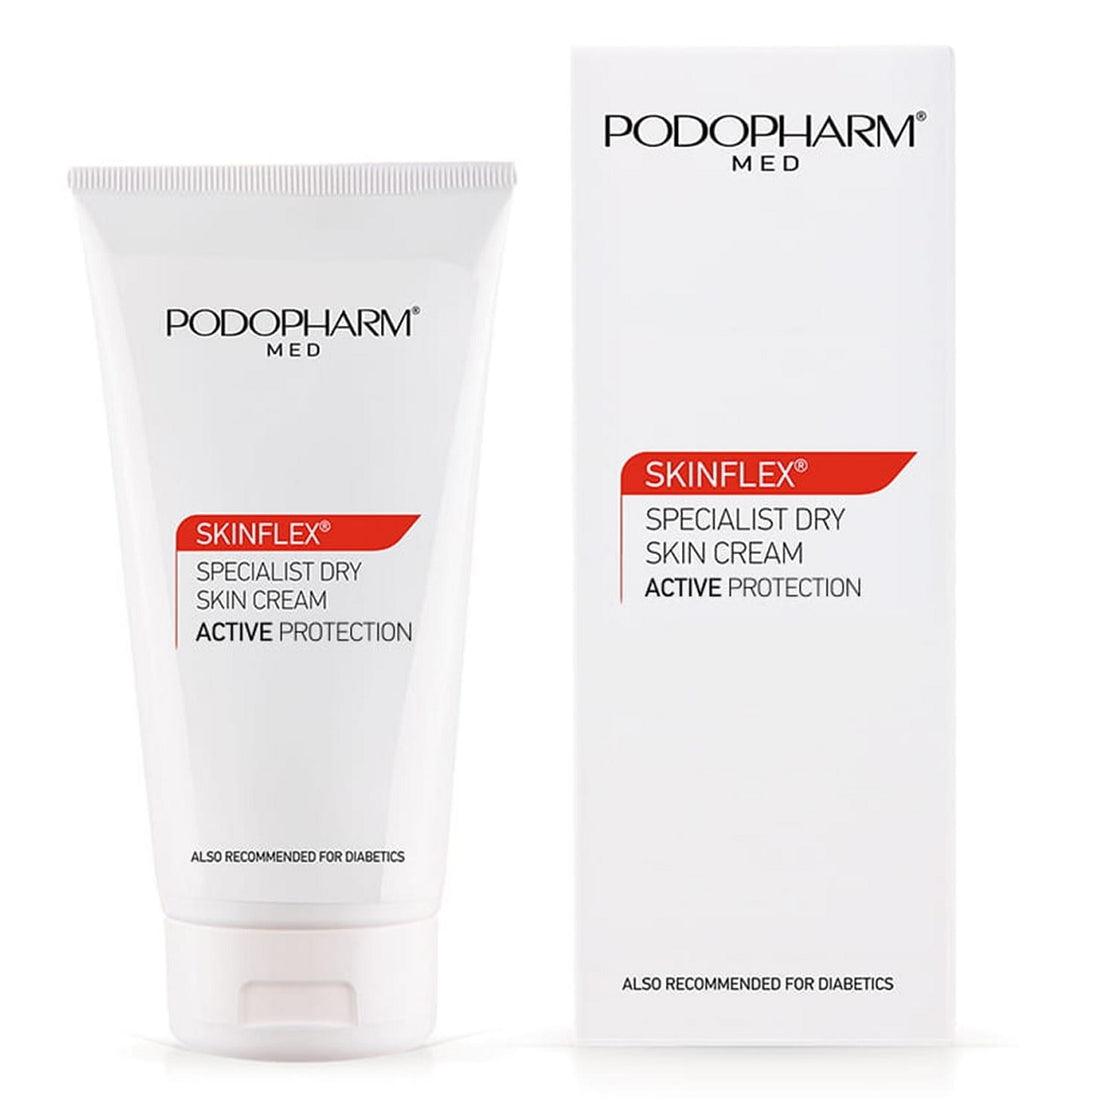 Podopharm Med Skinflex Specialist Dry Skin Cream Active Protection 150ml Podopharm